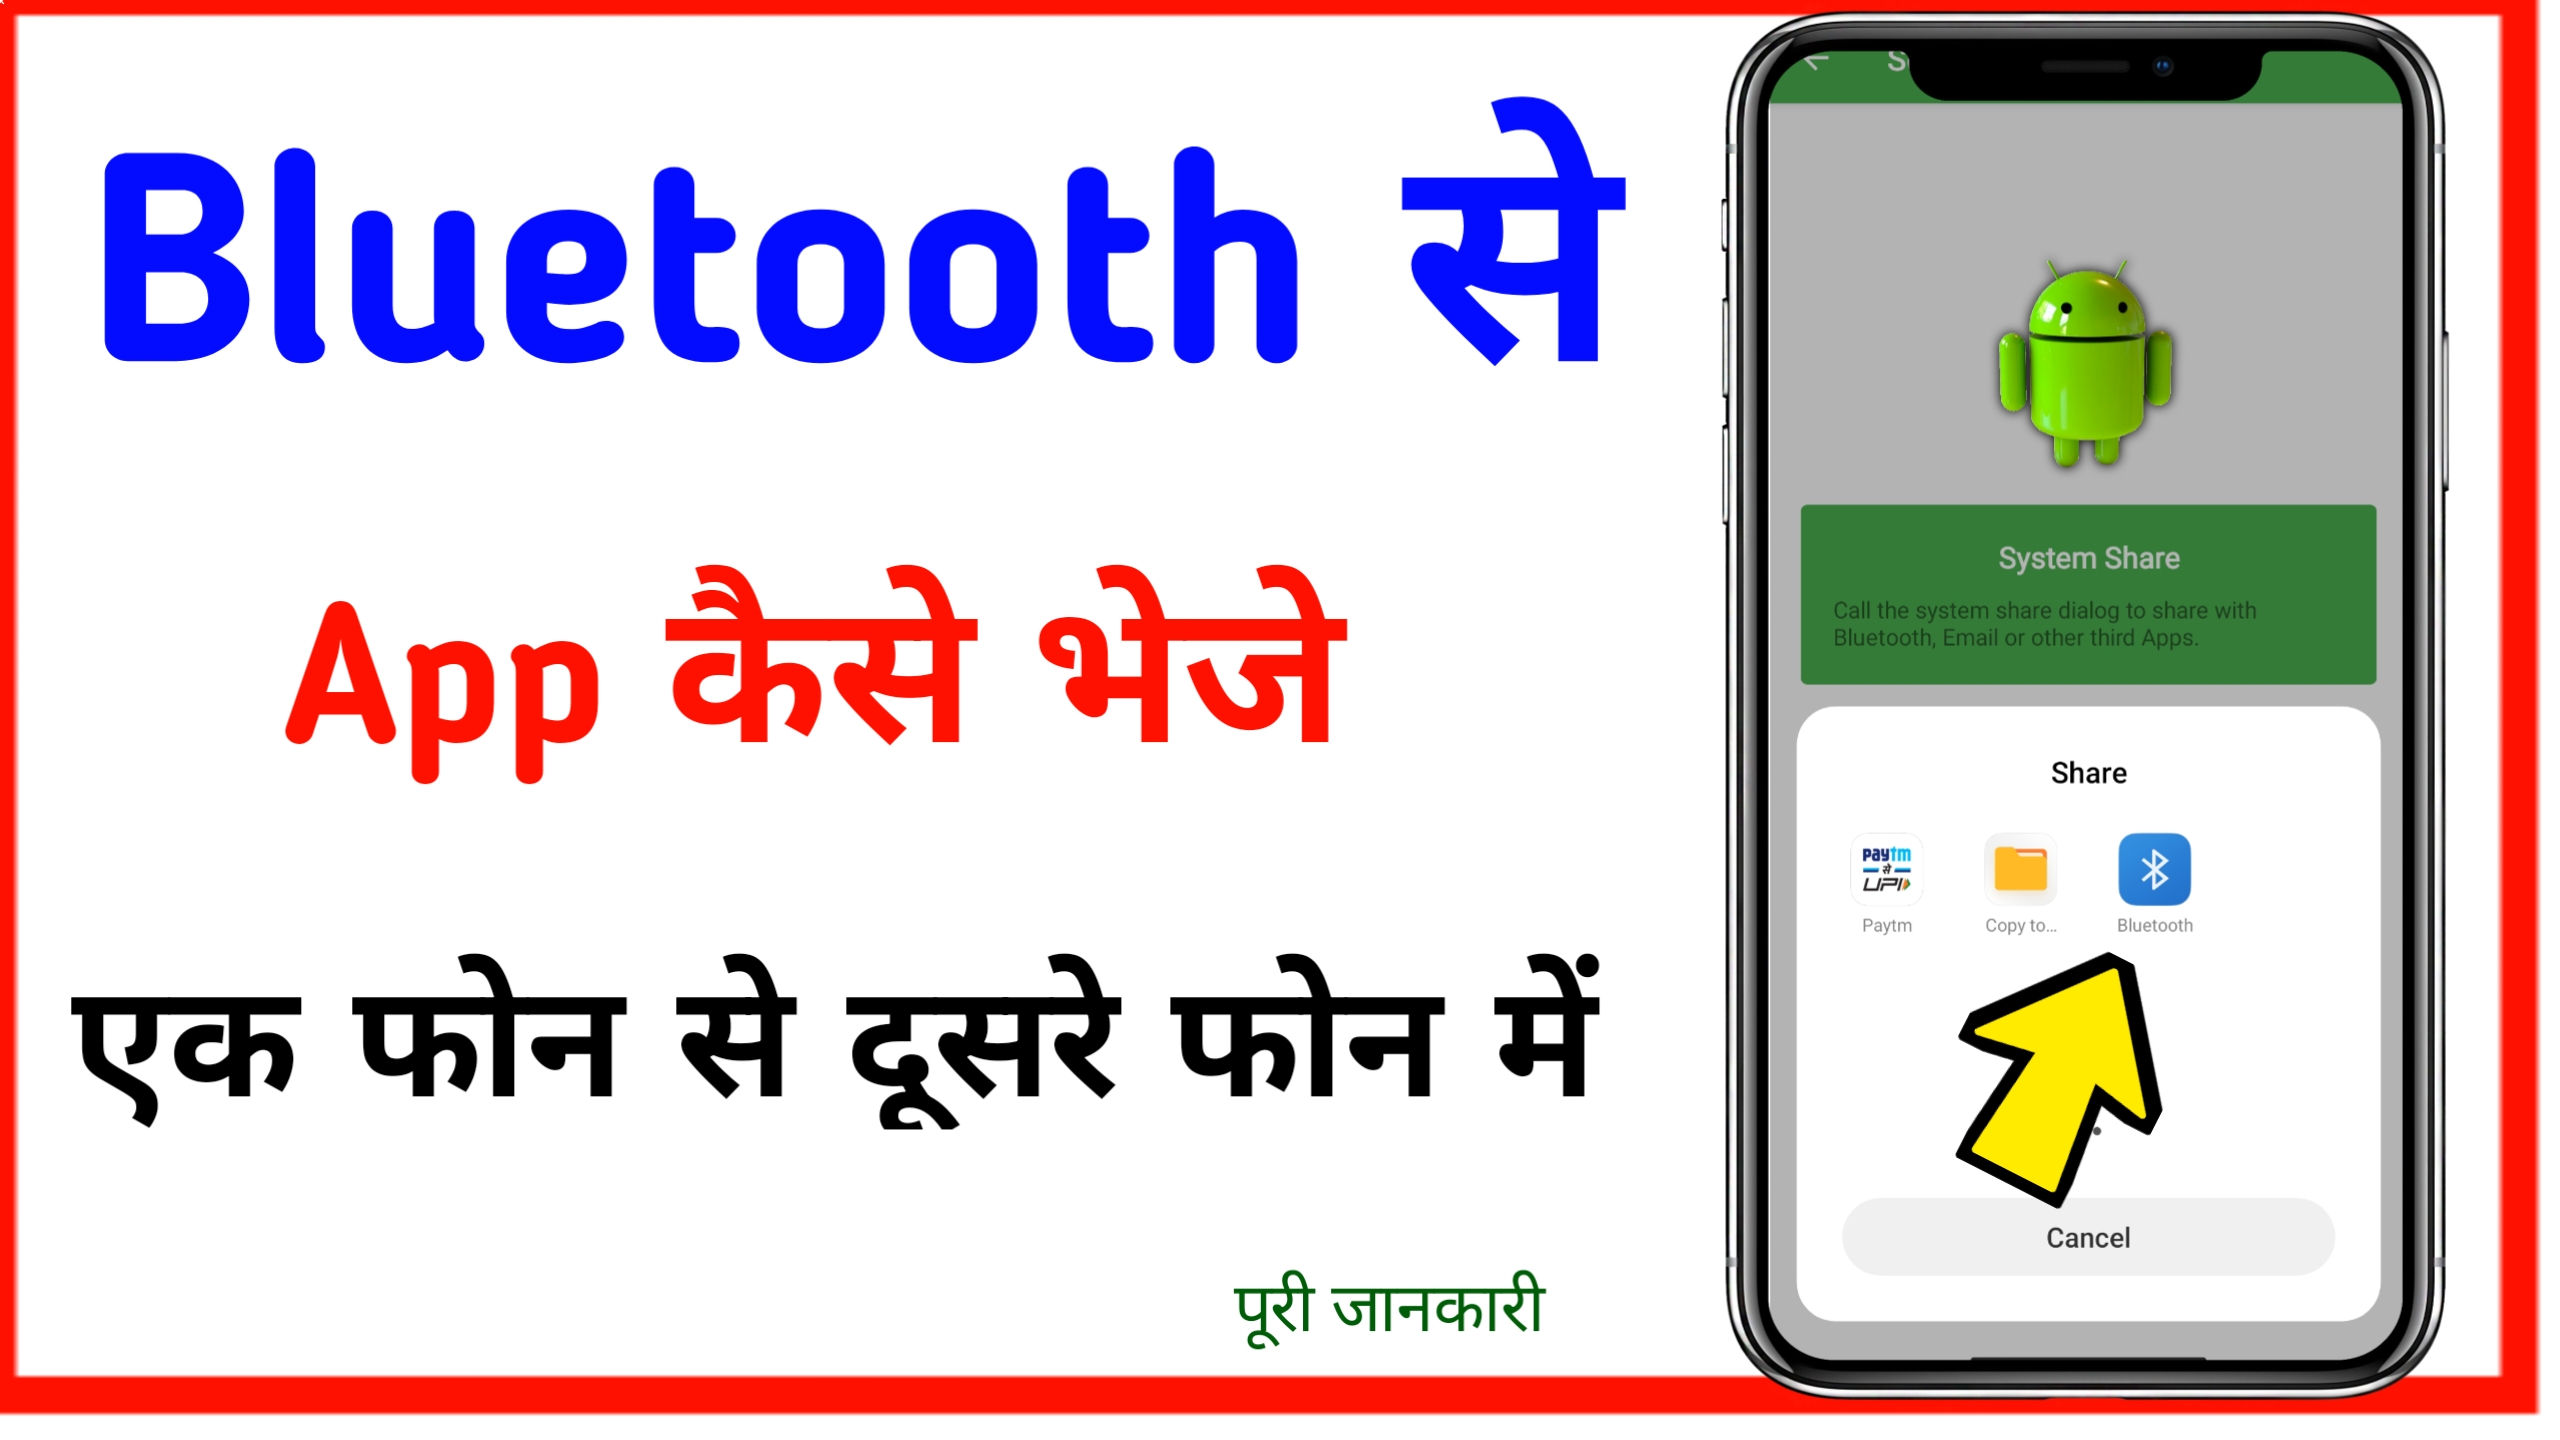 Bluetooth se app kaise bheje / App भेजने का तरीका